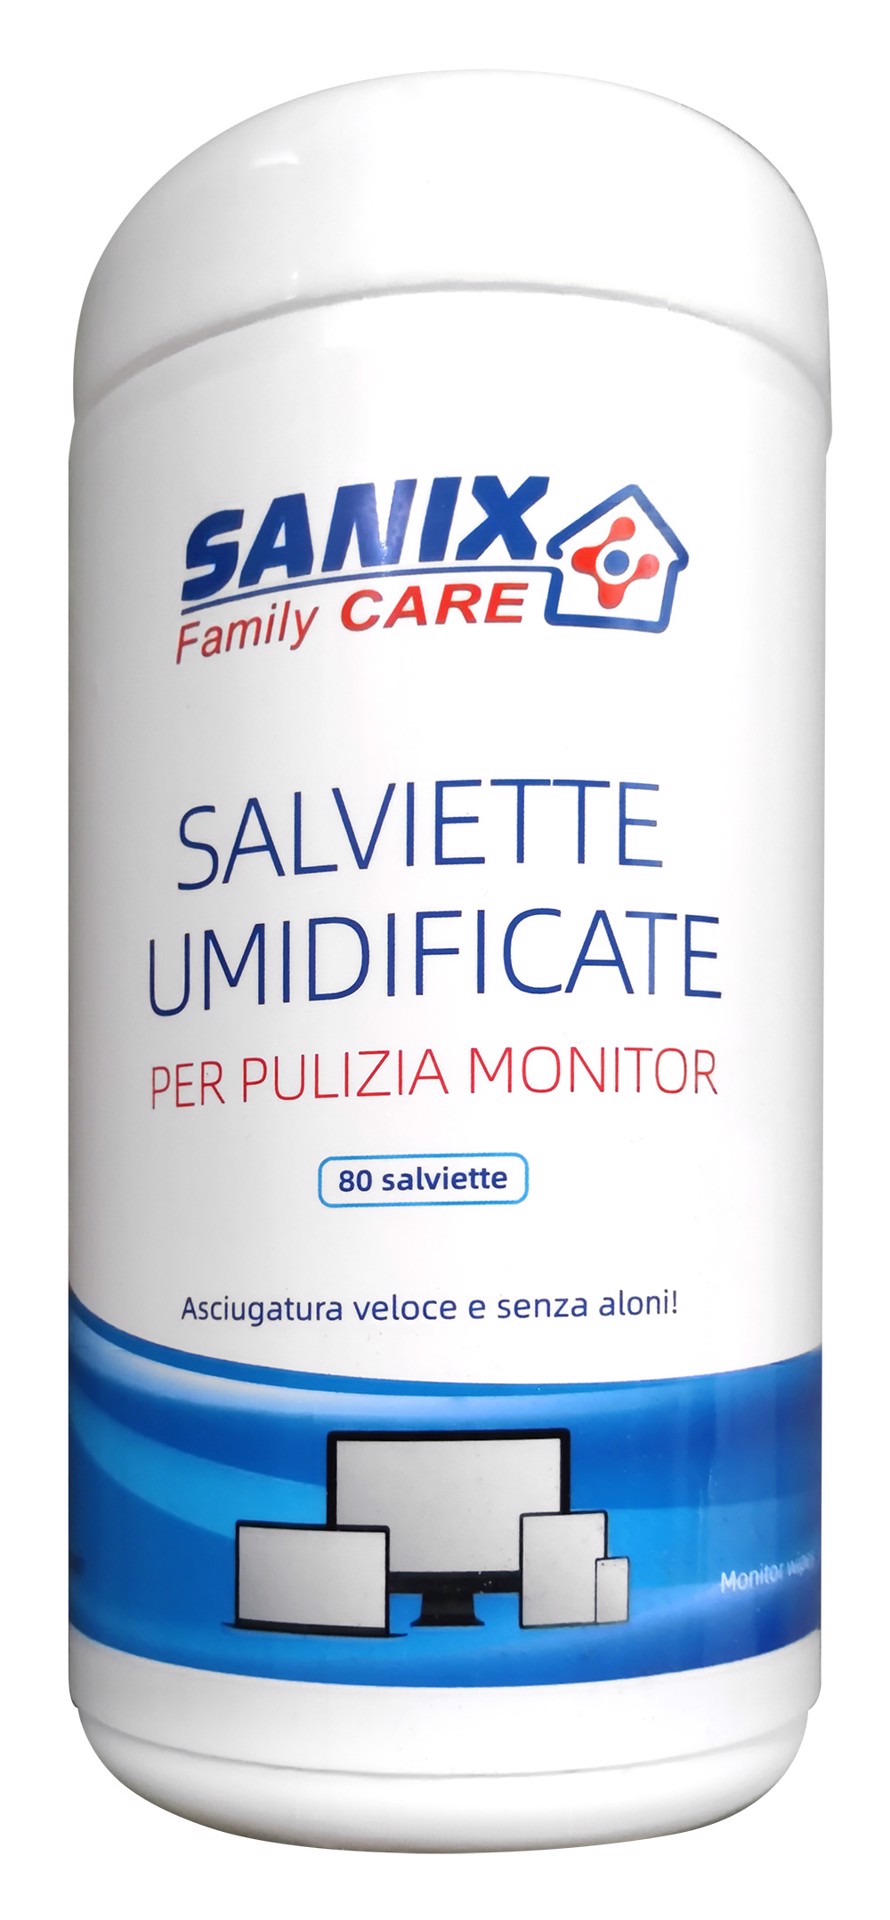 Sanix Engineering Care Salviette Umidificate Per Pulizia Monitor - Sanix, Detergenti in Offerta su Stay On